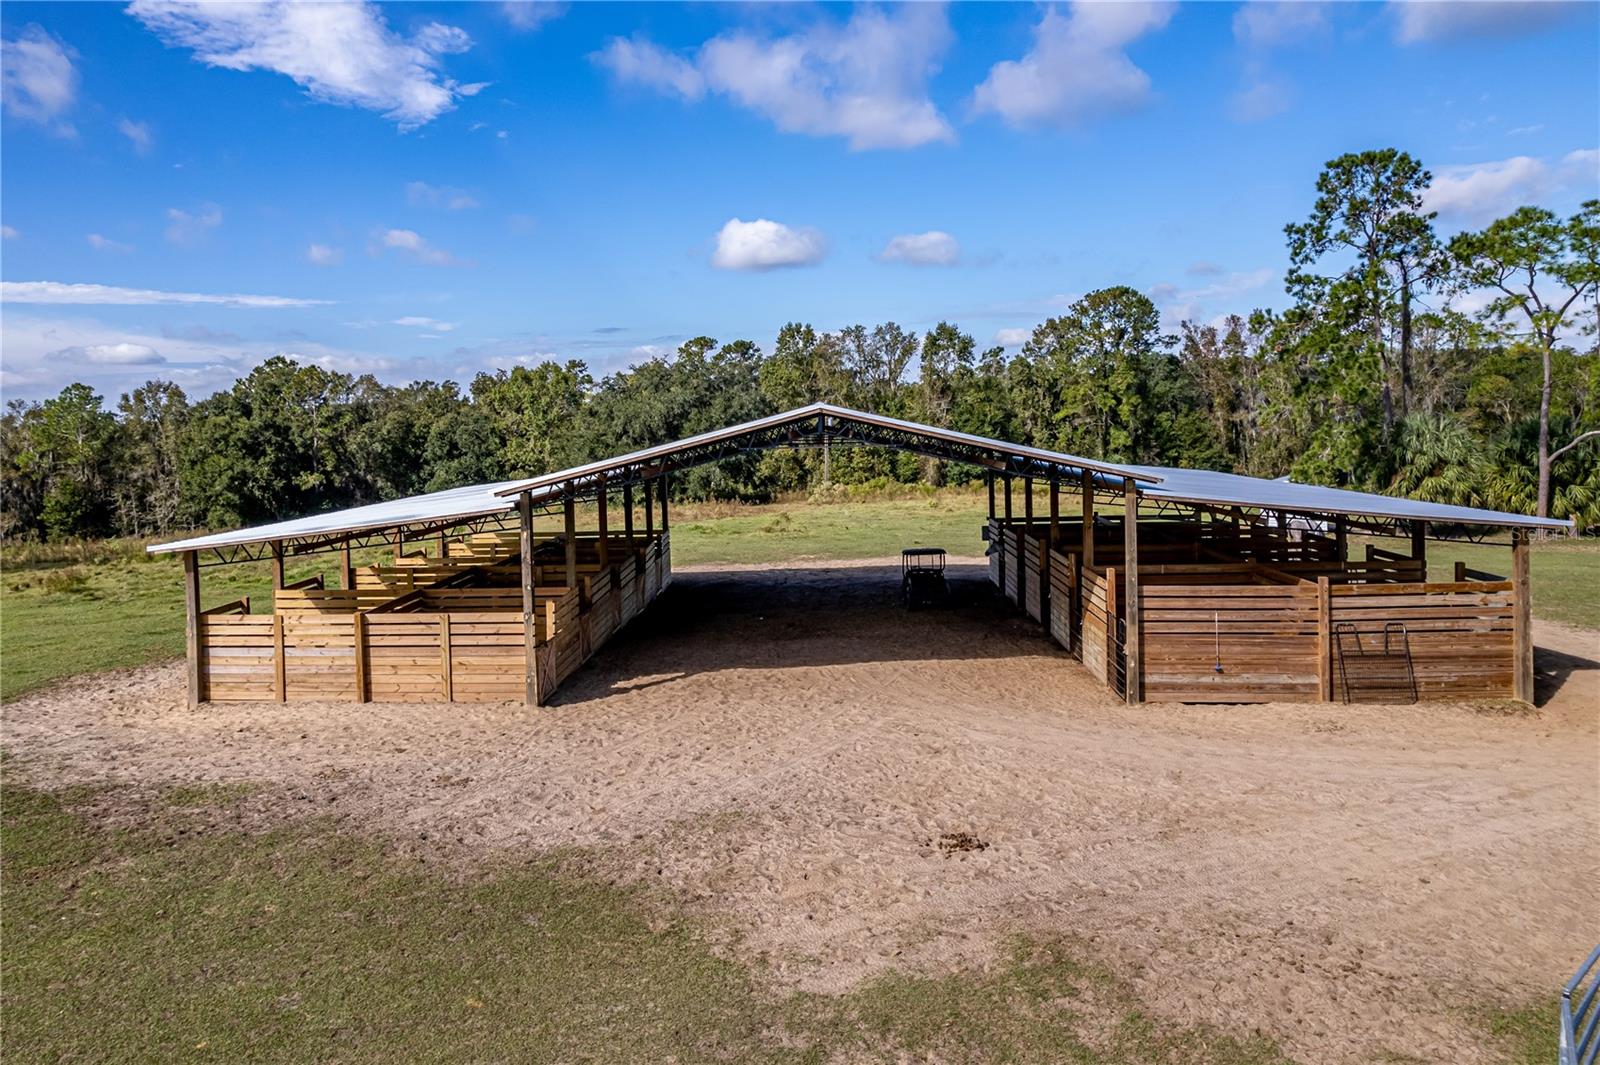 20 Stall Horse Barn